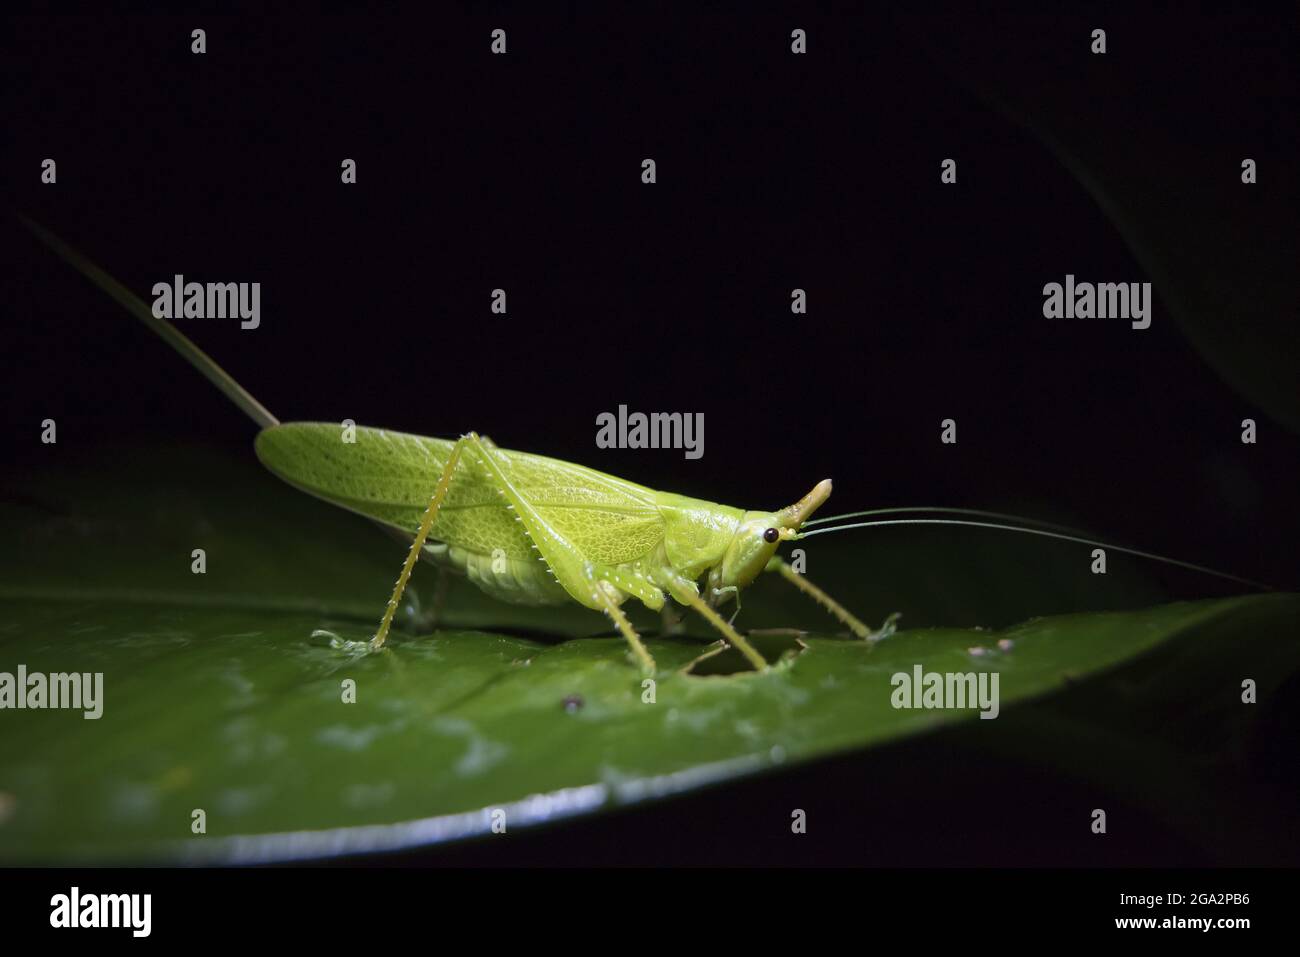 A bush cricket or Long-horned grasshopper (Tettigoniidae) clings to a tropical plant at night; Puntarenas, Costa Rica Stock Photo